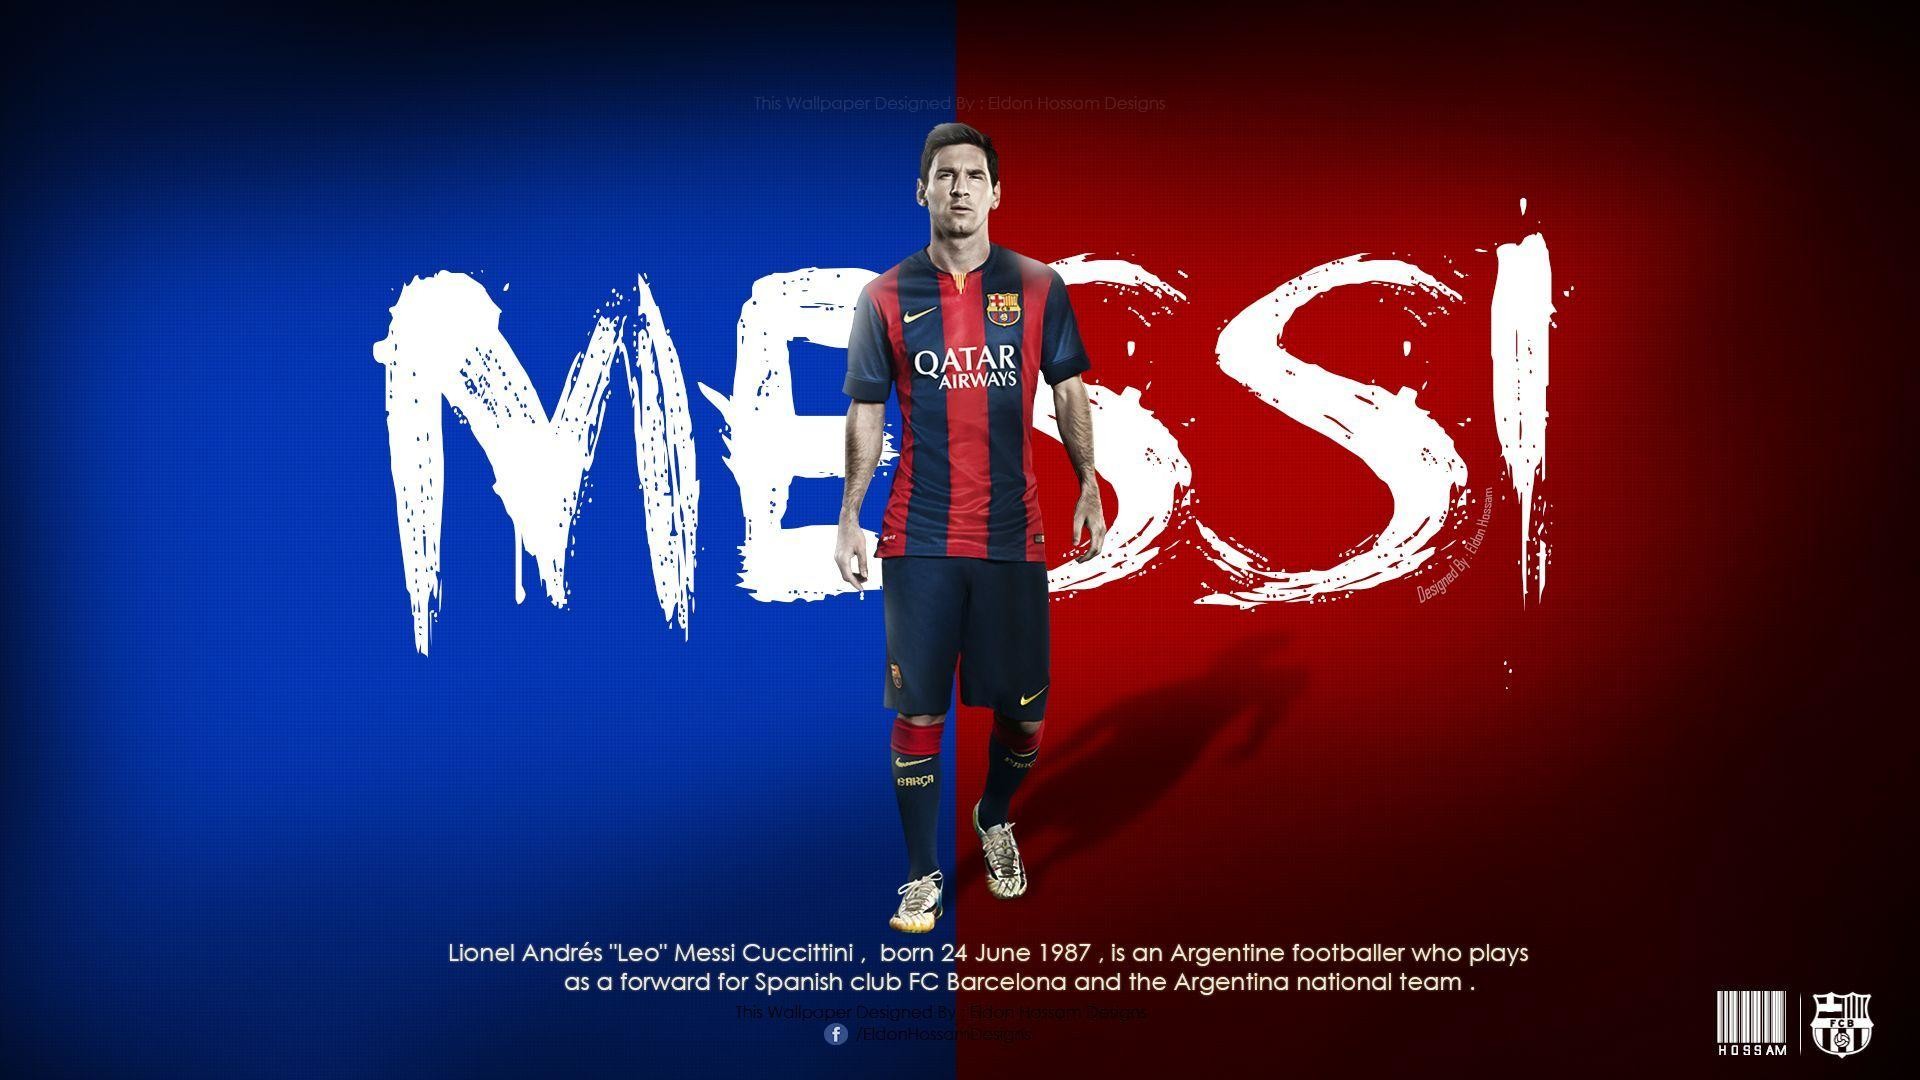 1920x1080 Messi Desktop Background | Wallpapers, Backgrounds, Images, Art ..